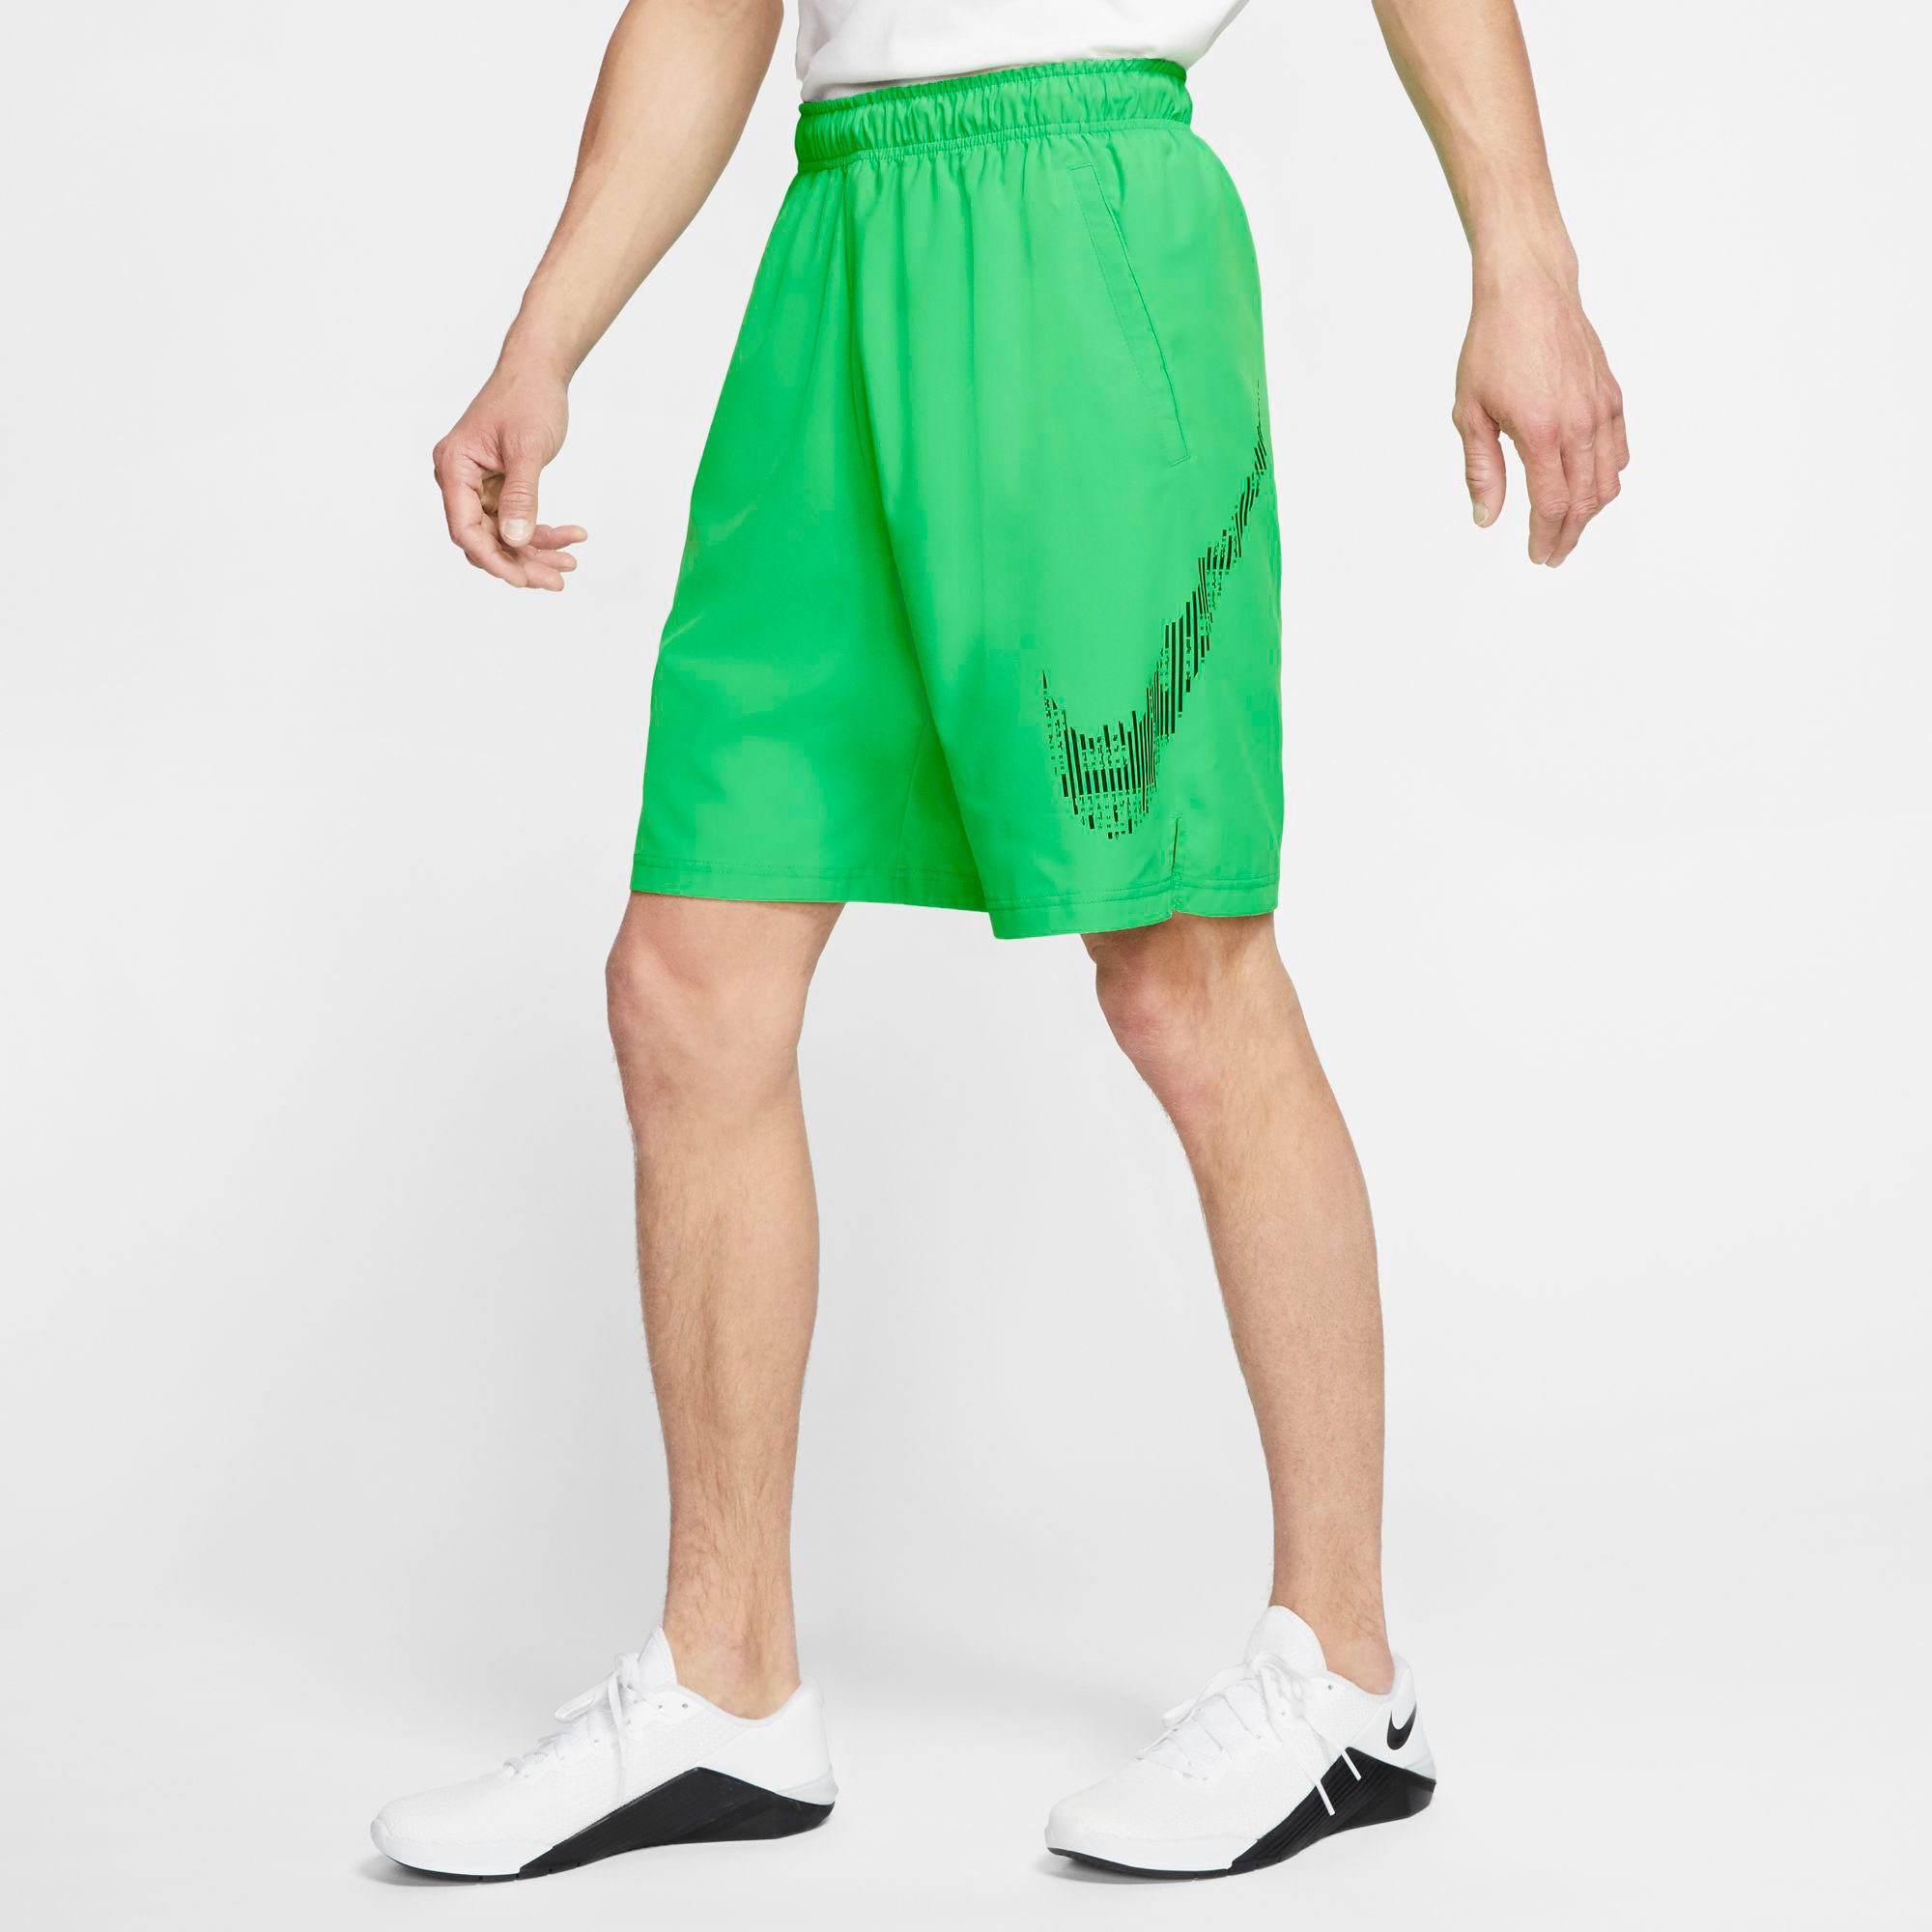 Men’s workout shorts